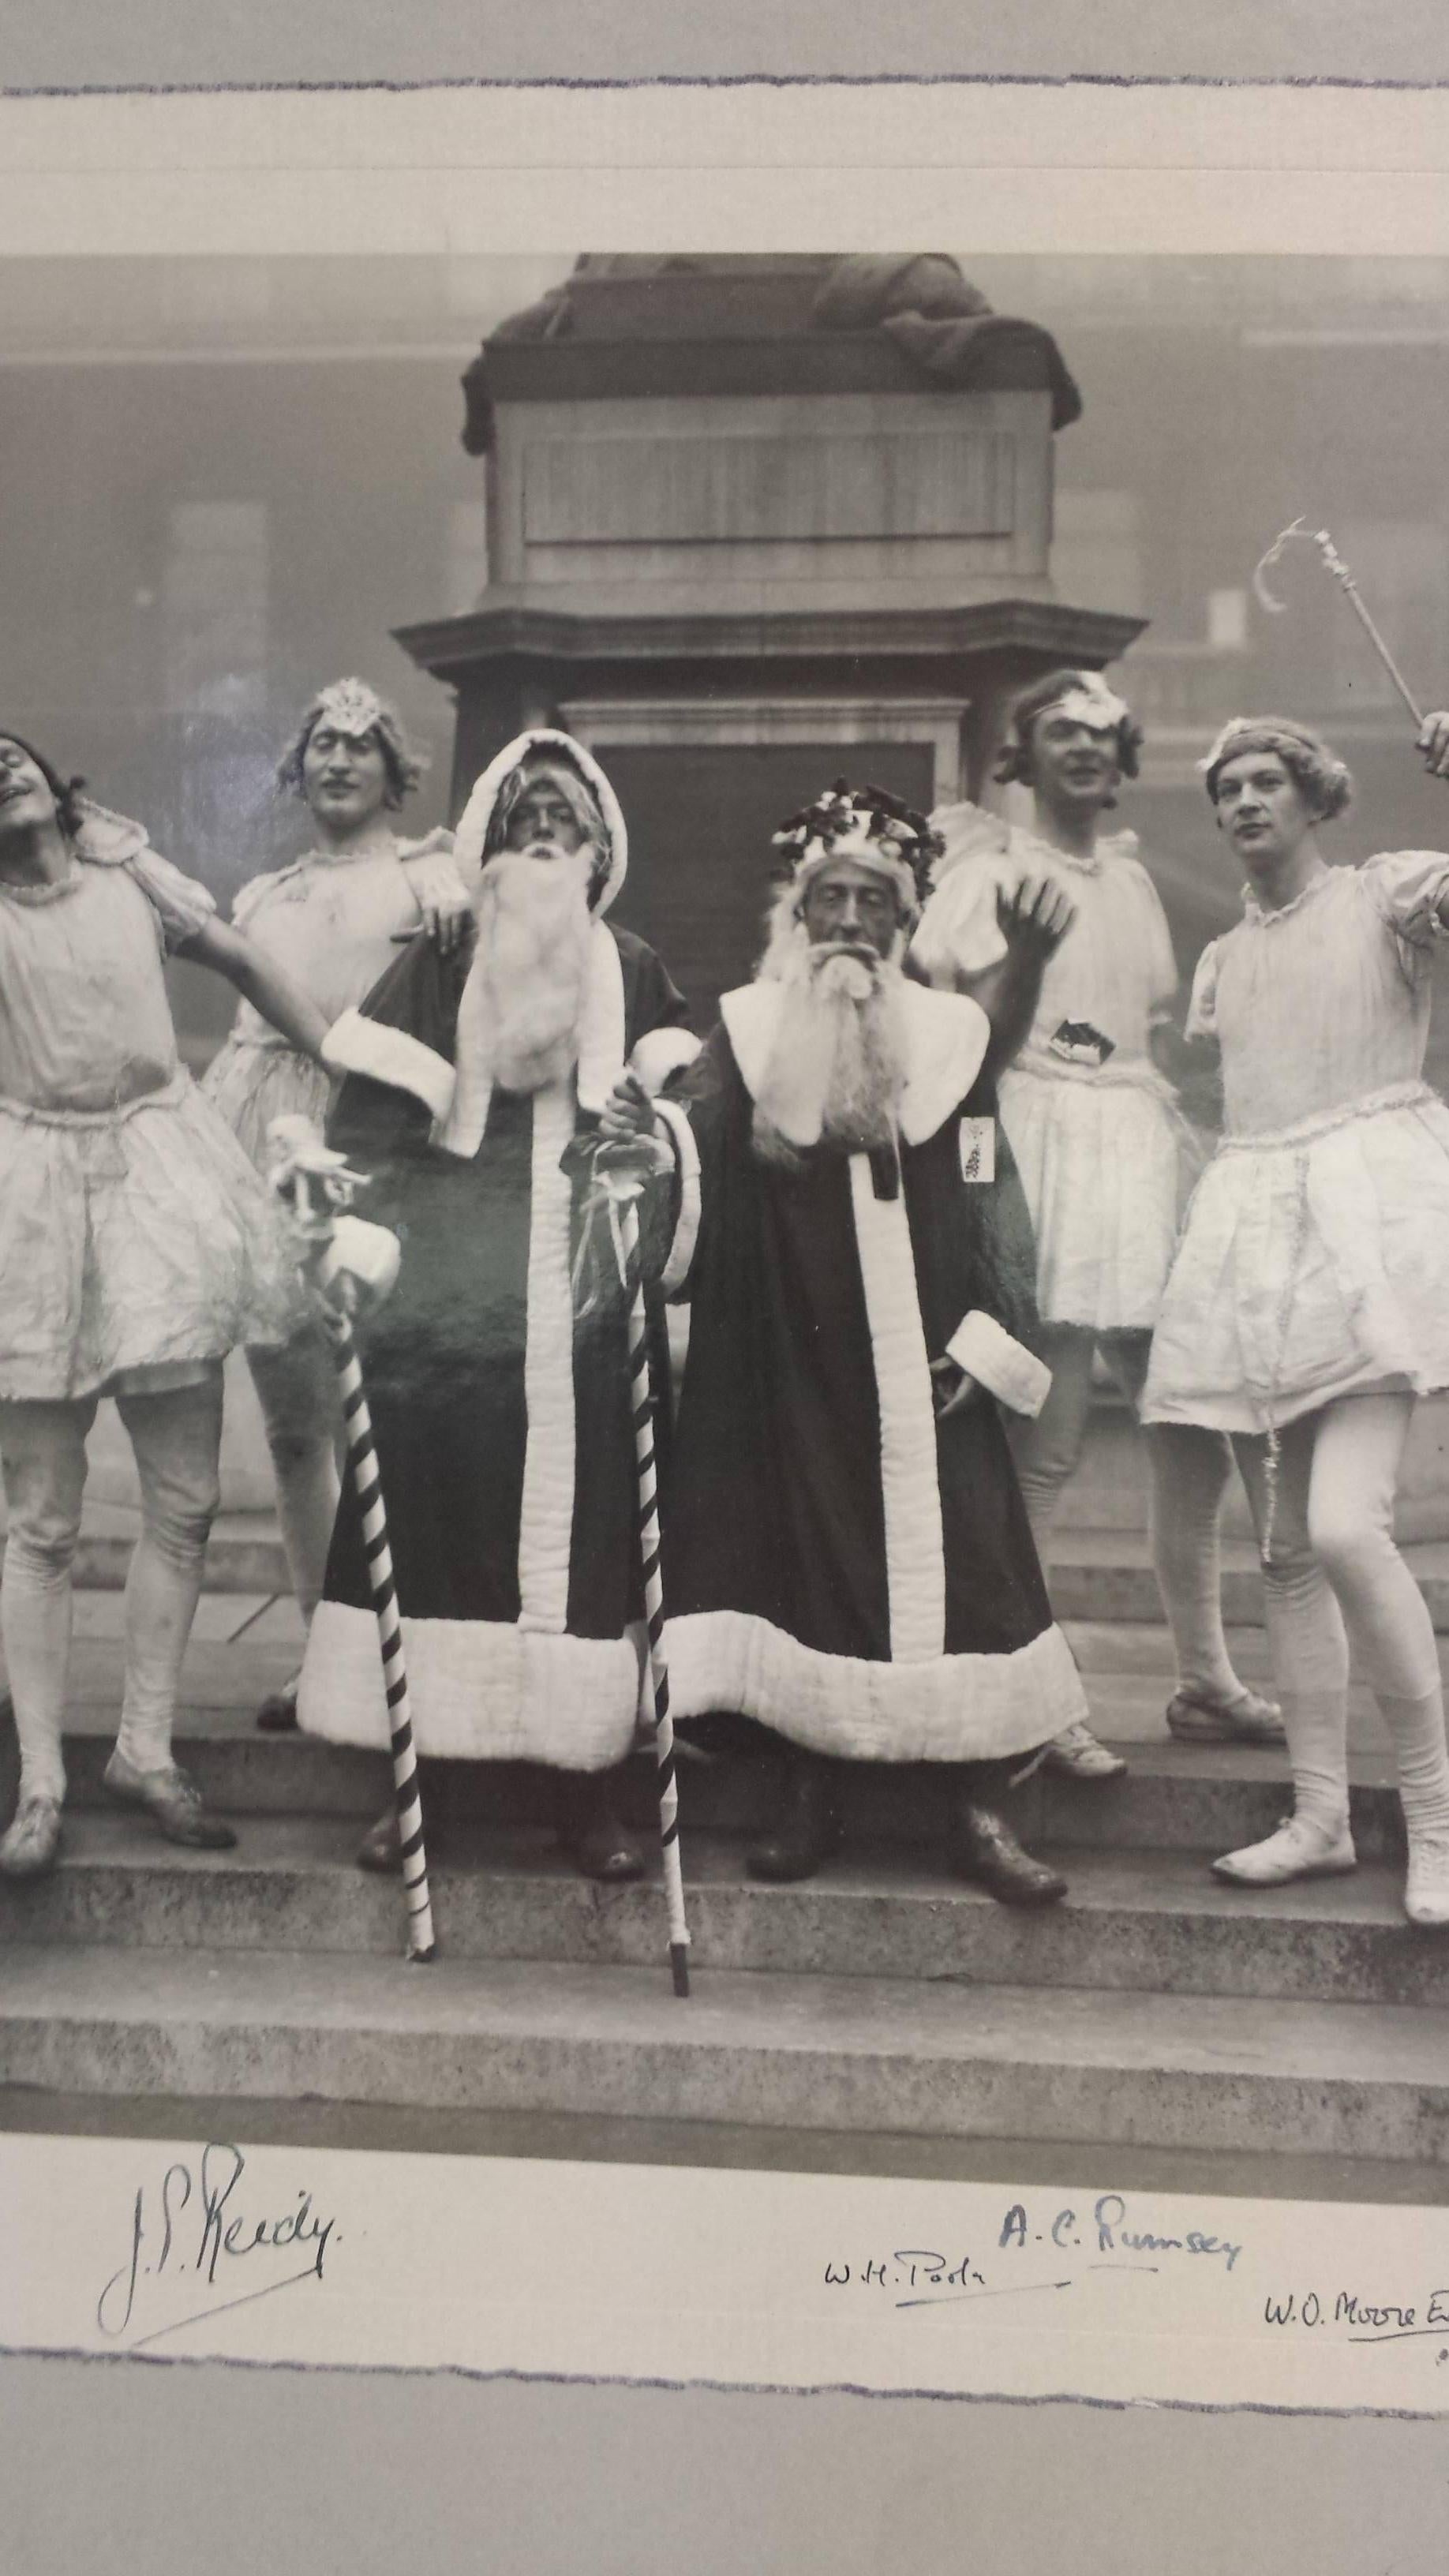 Albert Hester Photograph Christmas 1933 Clapton London, London Hospital Band 2